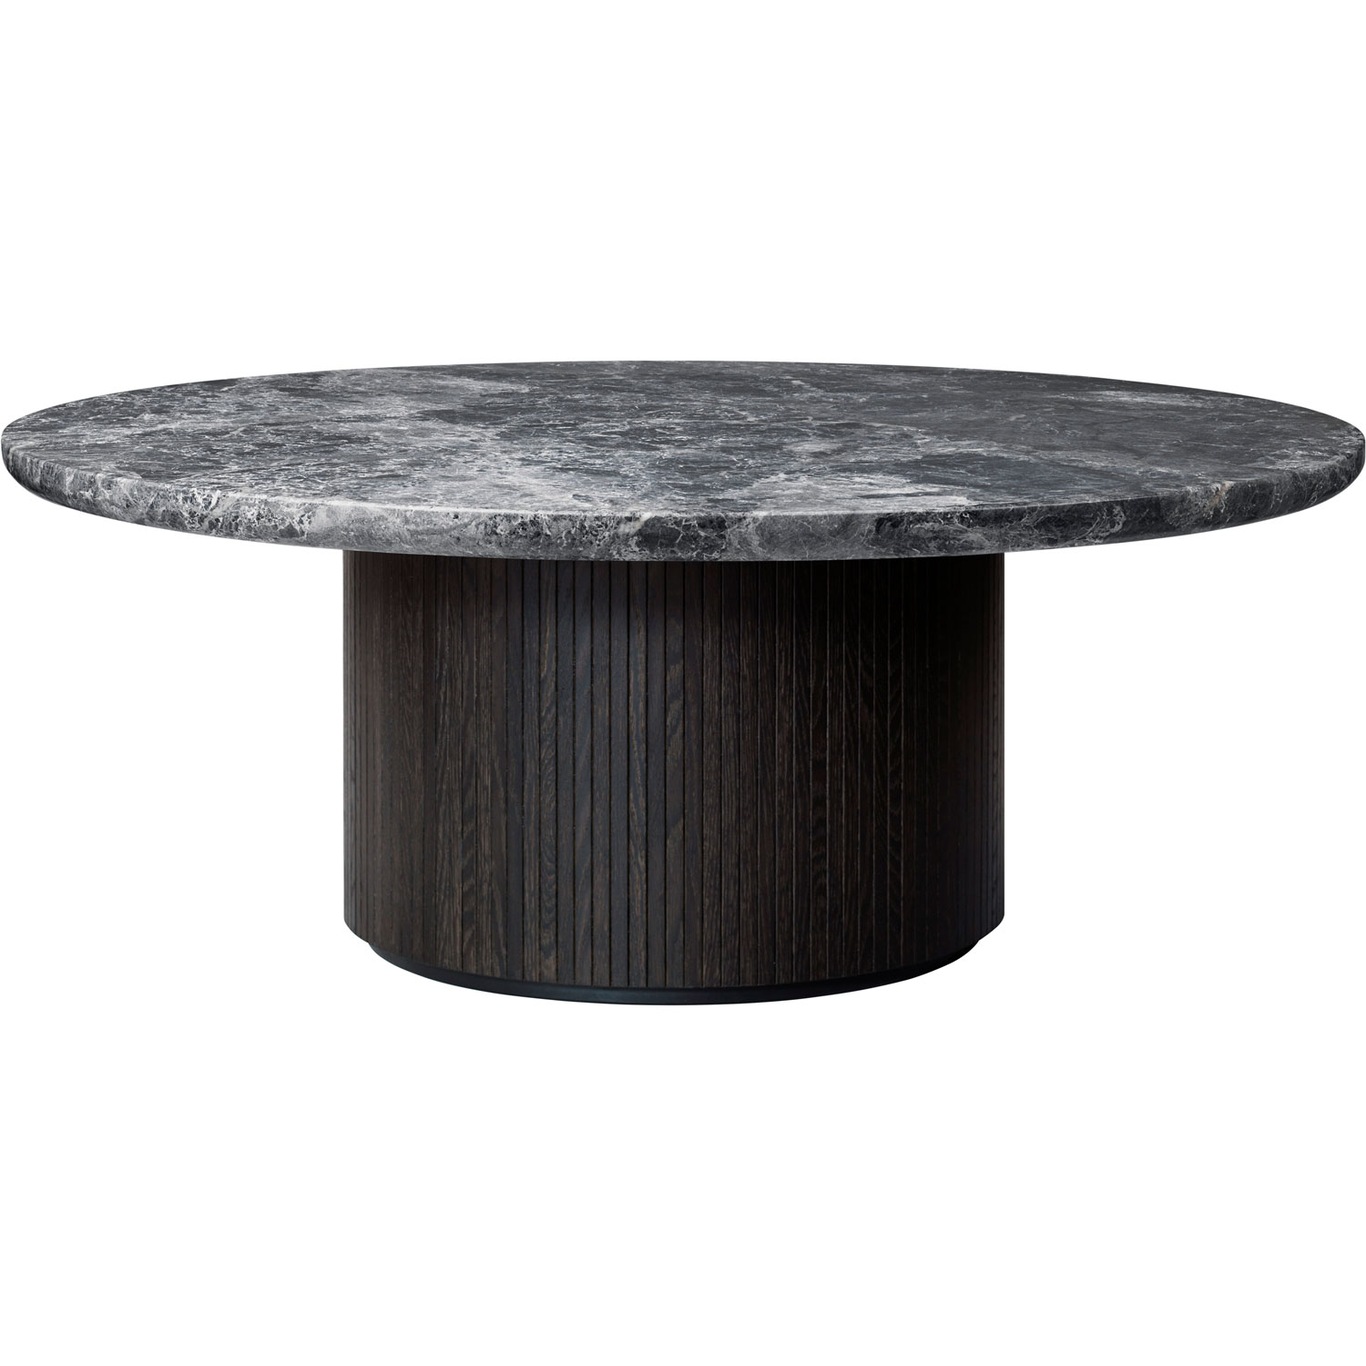 Moon Coffee Table Round Ø120 H45, Brown Black / Grey Marble